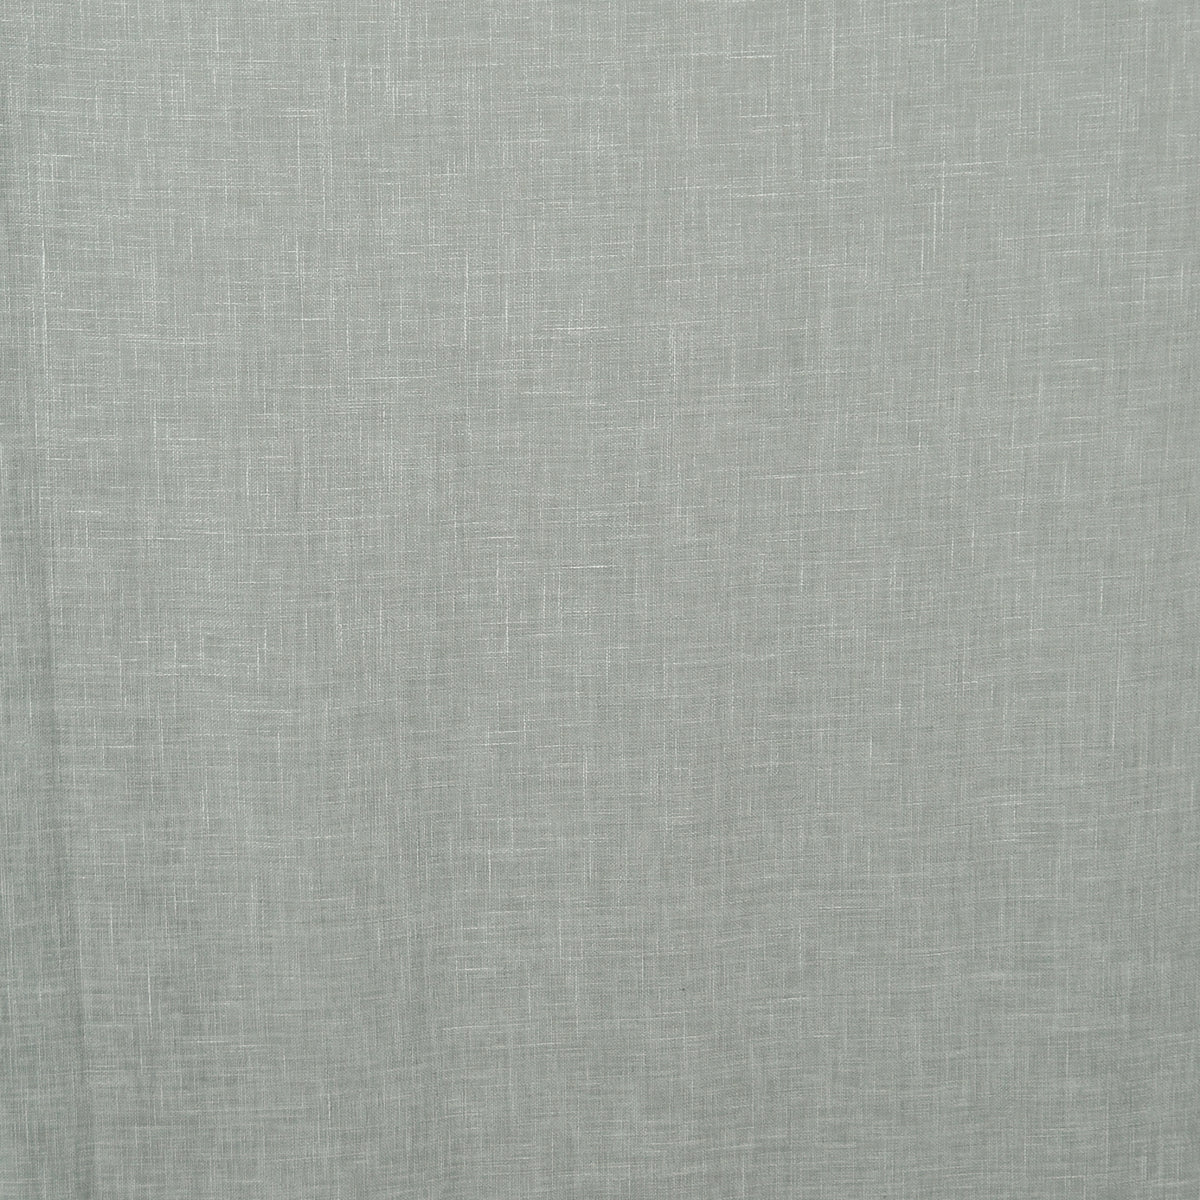 Day curtain soft gray Vliet